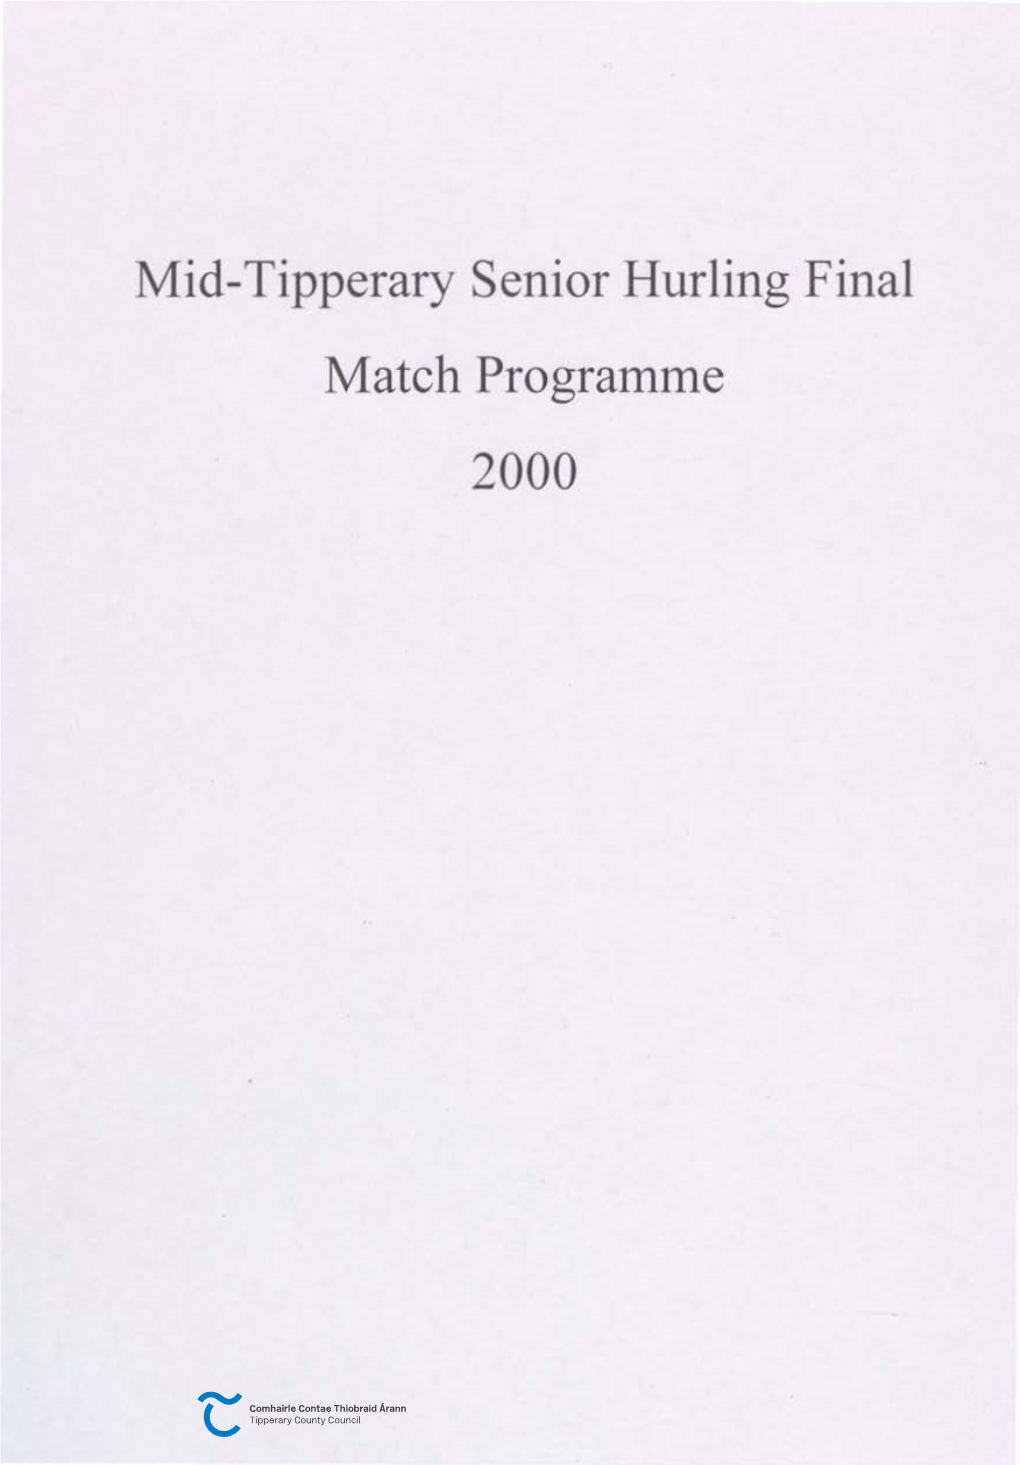 Mid-Tipperary Senior Hurling Final Match Programme 2000